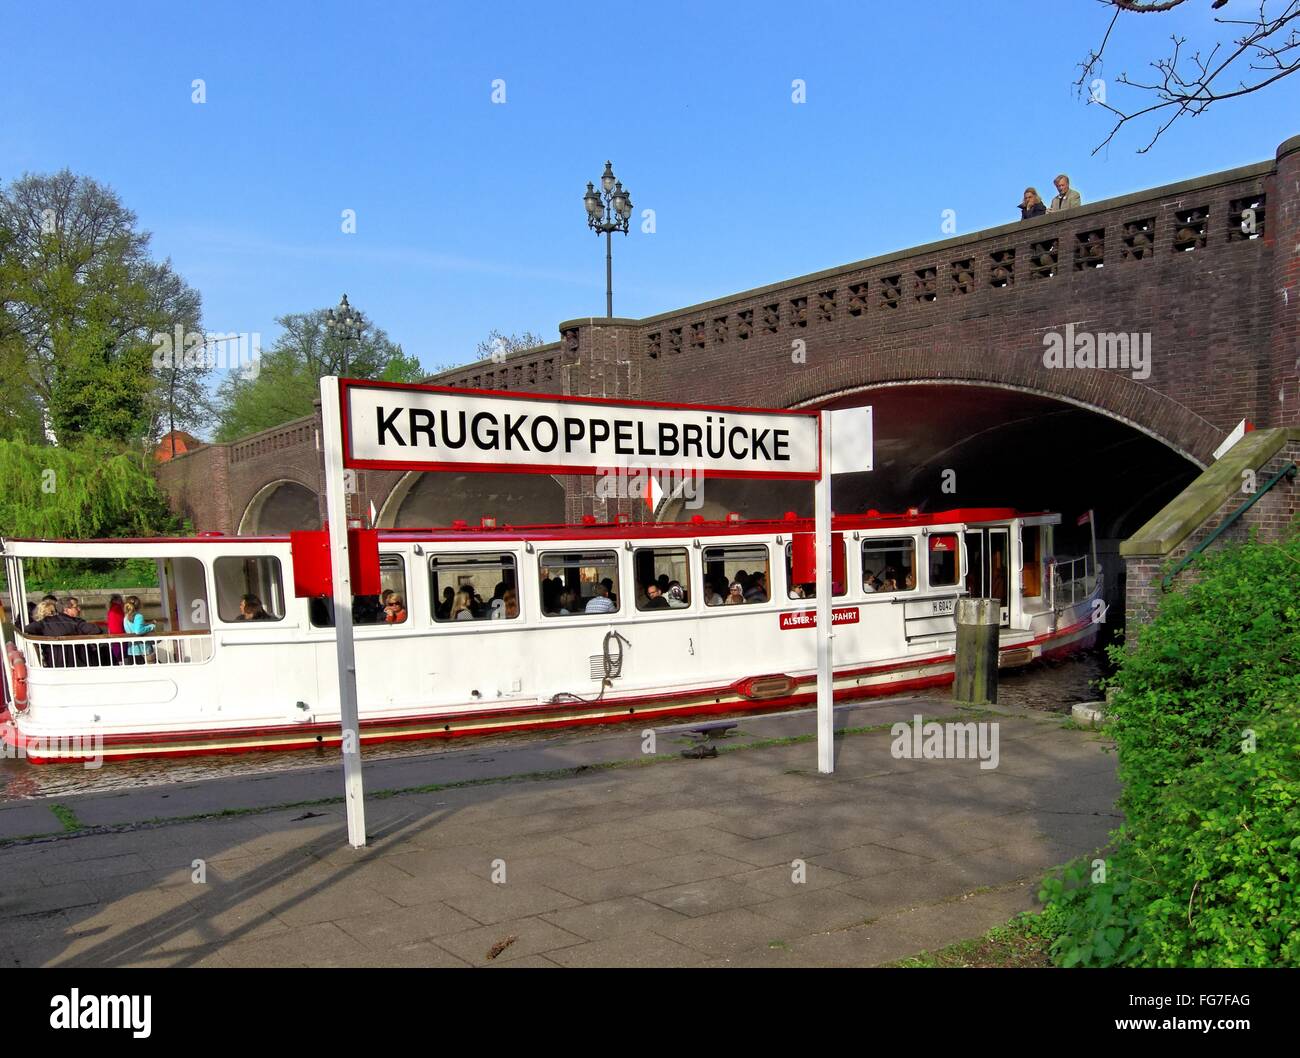 Géographie / voyage, Allemagne, Hambourg, Krugkoppelbrücke, navire à passagers à l'embarcadère, , Additional-Rights Clearance-Info-Not-Available- Banque D'Images